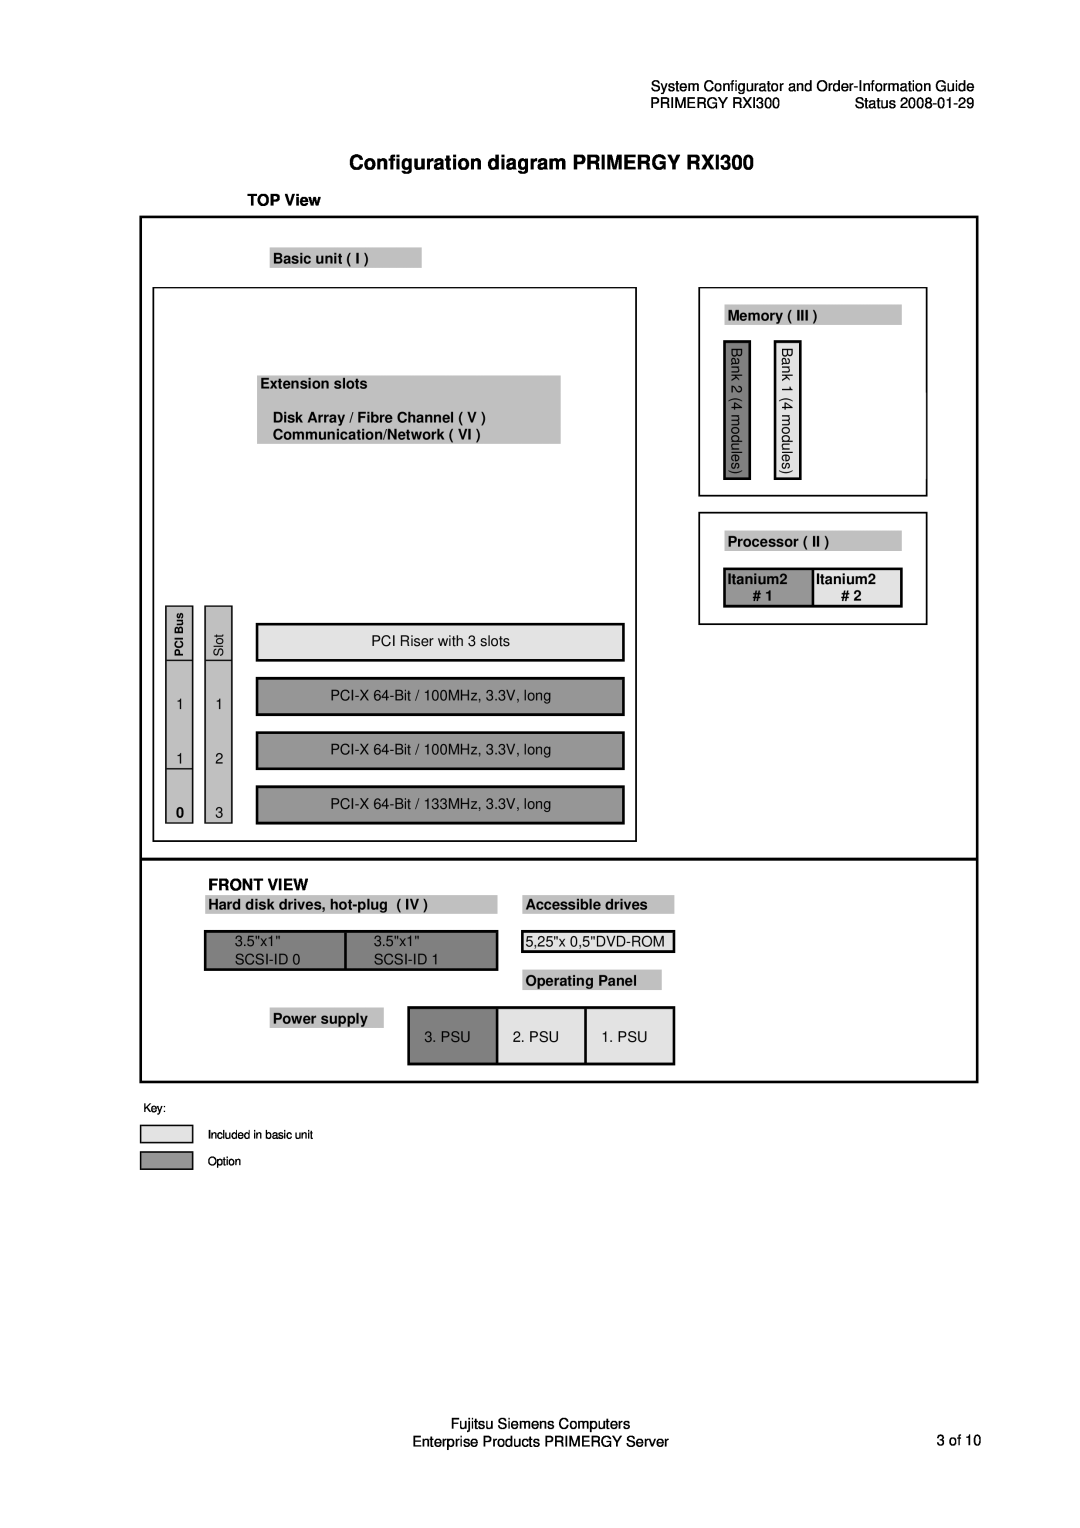 Fujitsu manual Configuration diagram PRIMERGY RXI300, TOP View, Front View 